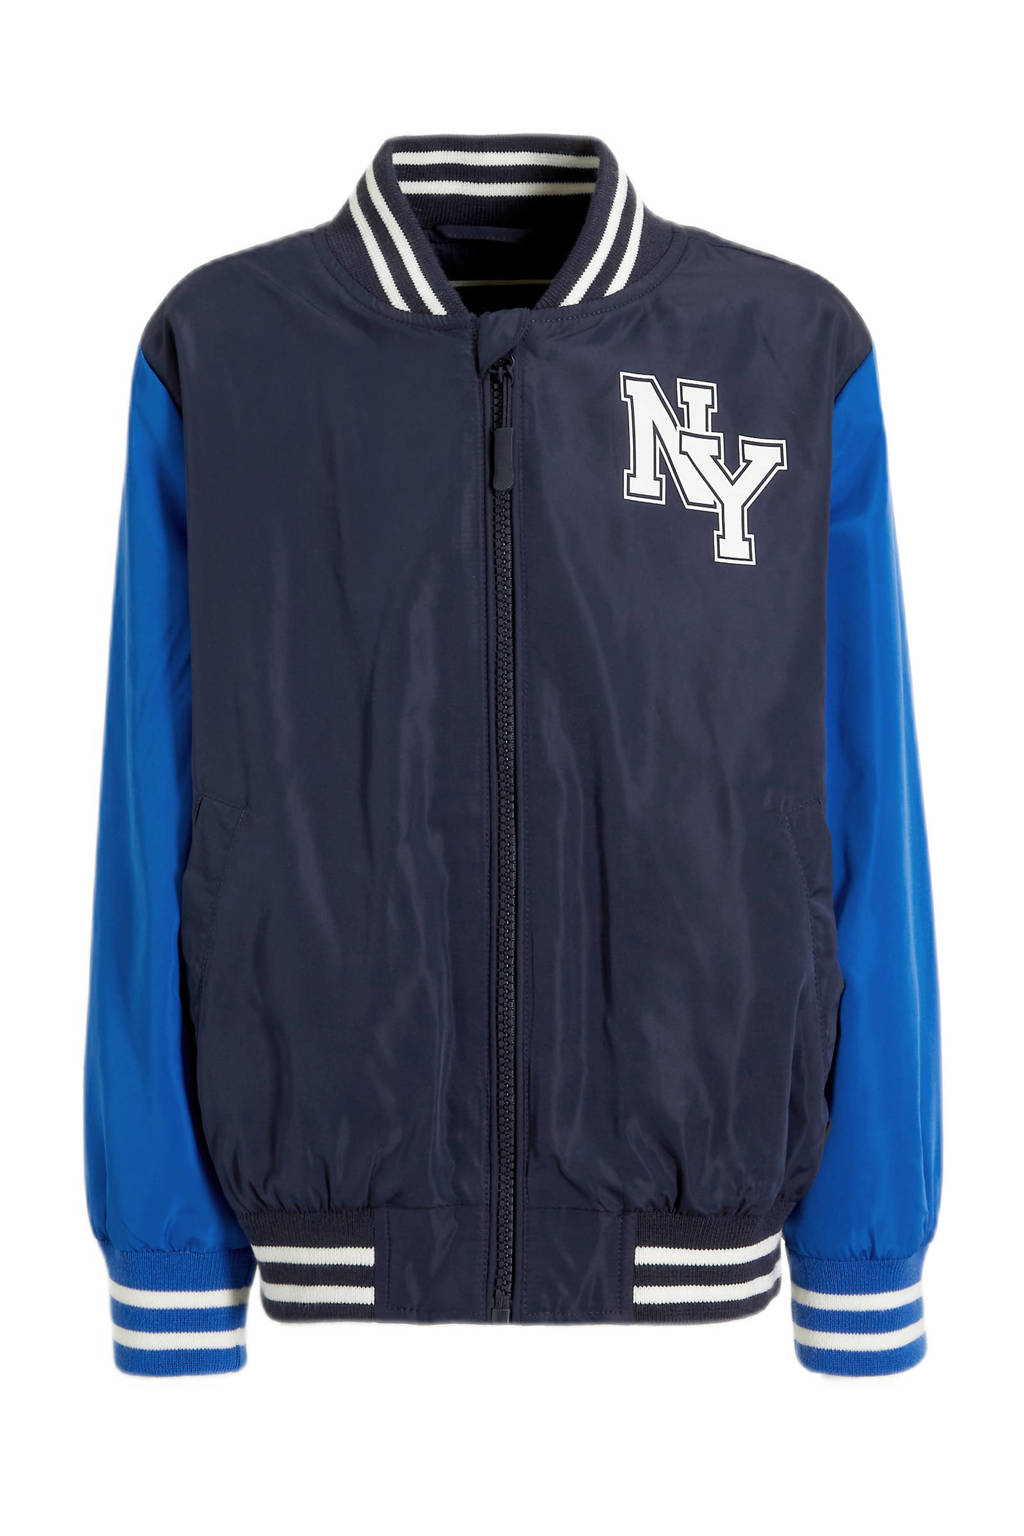 baseball jacket Marten donkerblauw/blauw